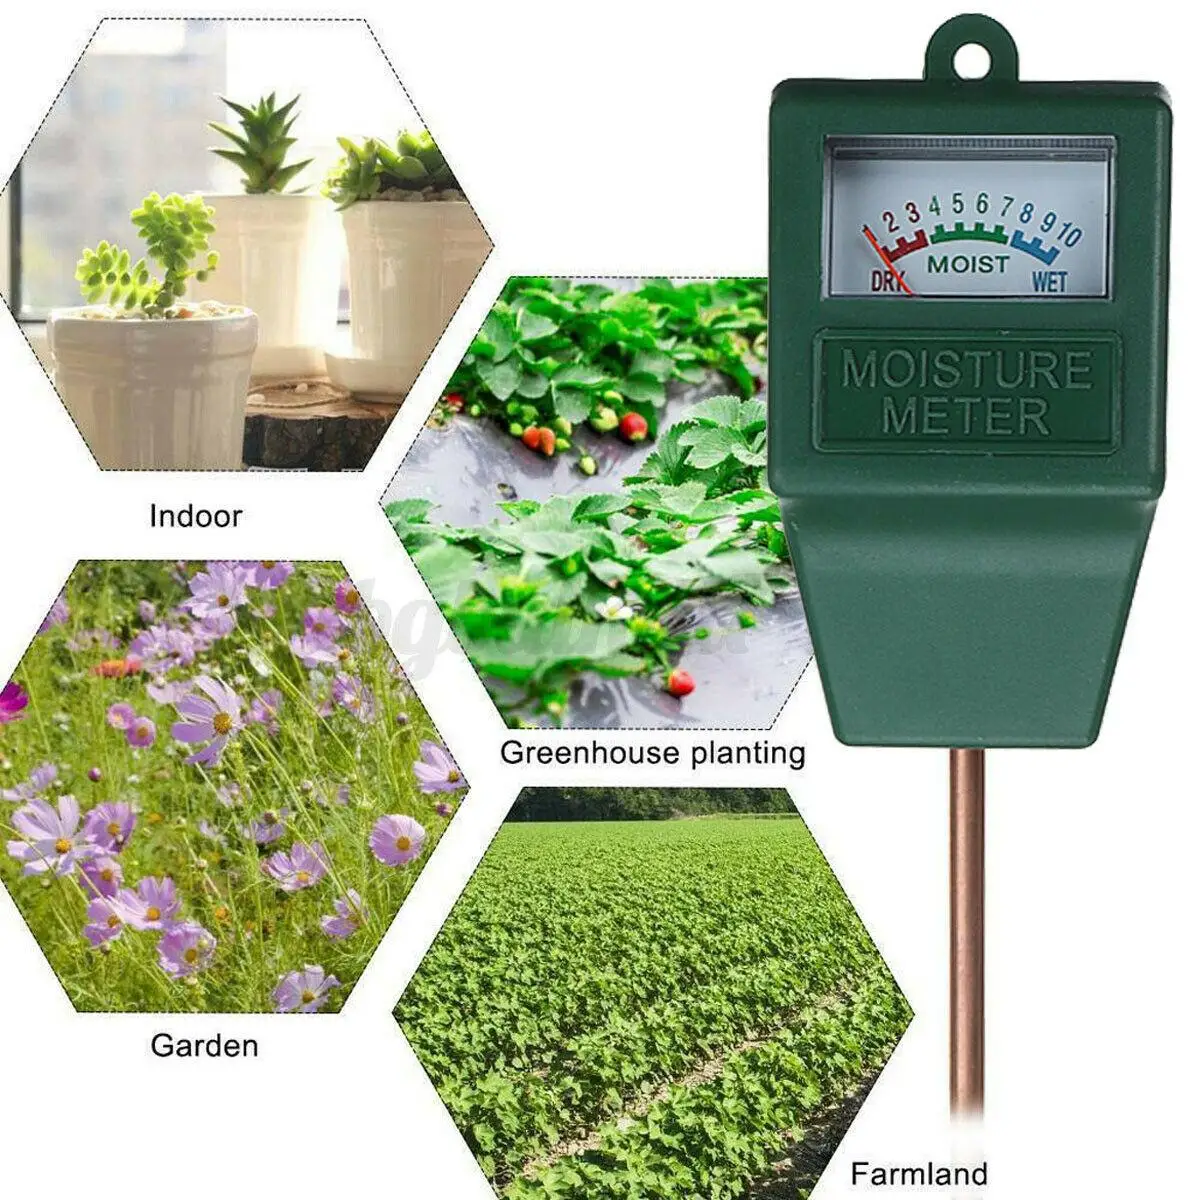 
LJJZH349 Moisture Meter Analyzer Measurement Probe for Garden Lawn Plant Flowers 